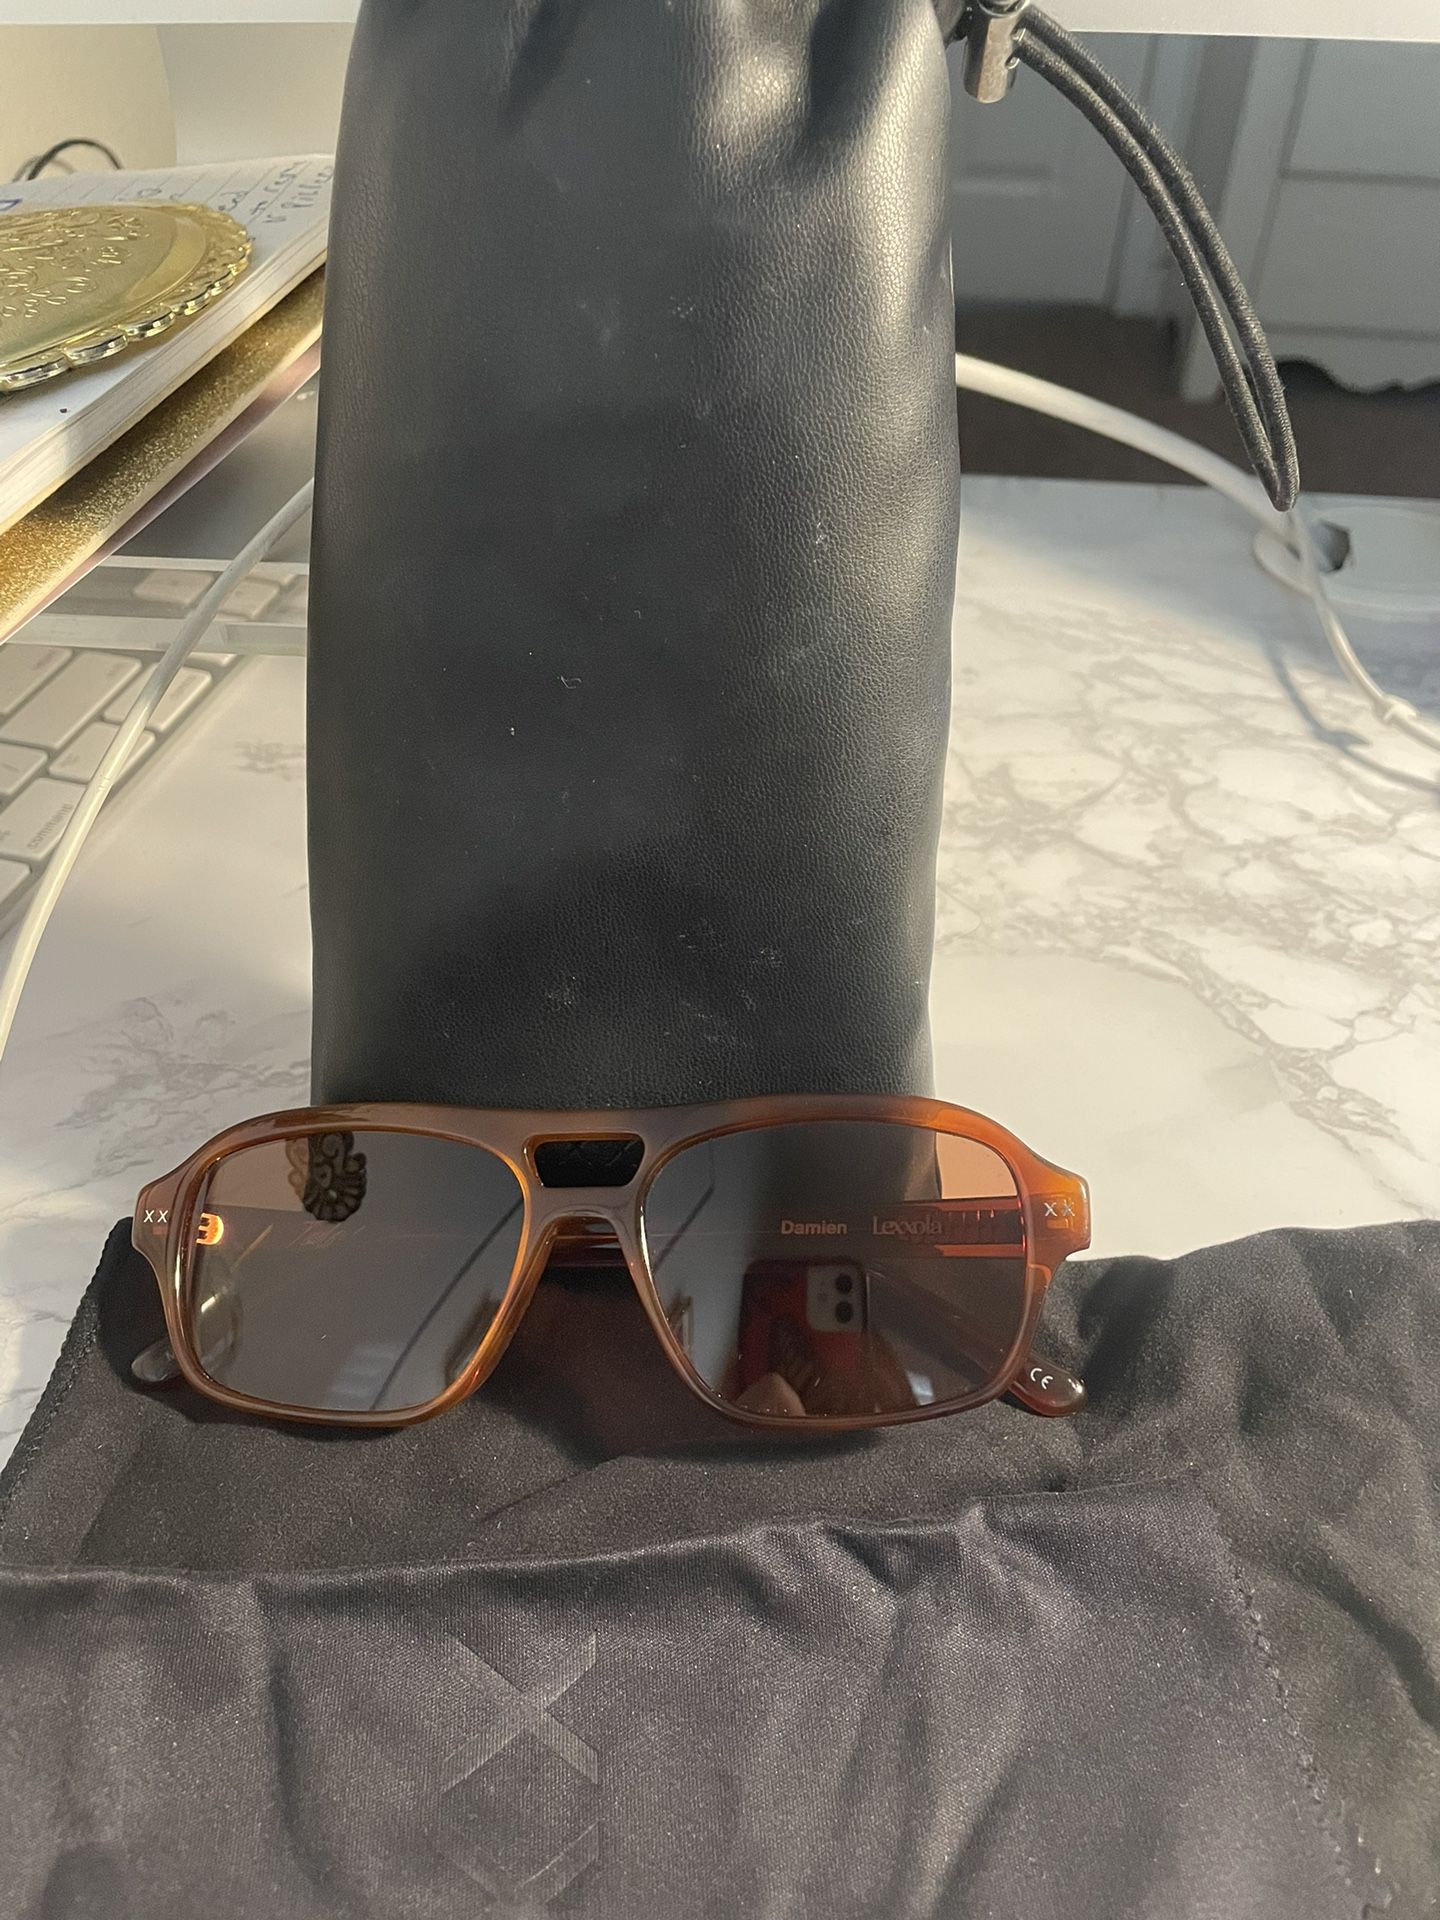 LEXXOLA “Damien” Sunglasses